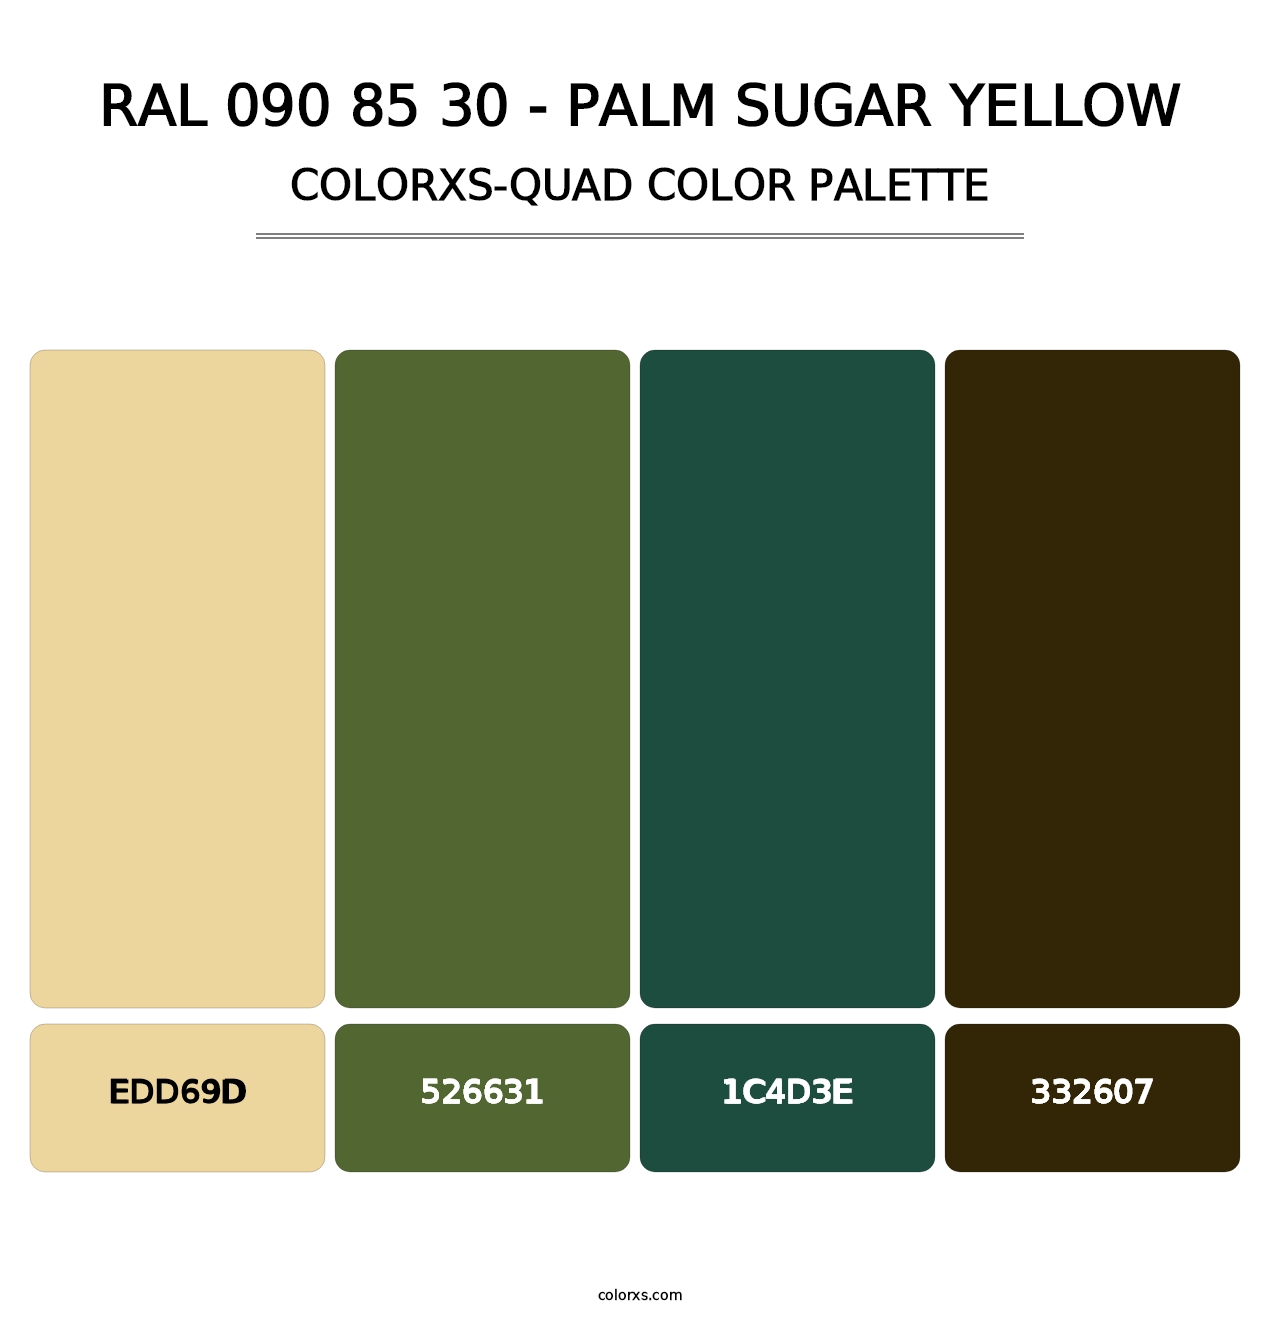 RAL 090 85 30 - Palm Sugar Yellow - Colorxs Quad Palette